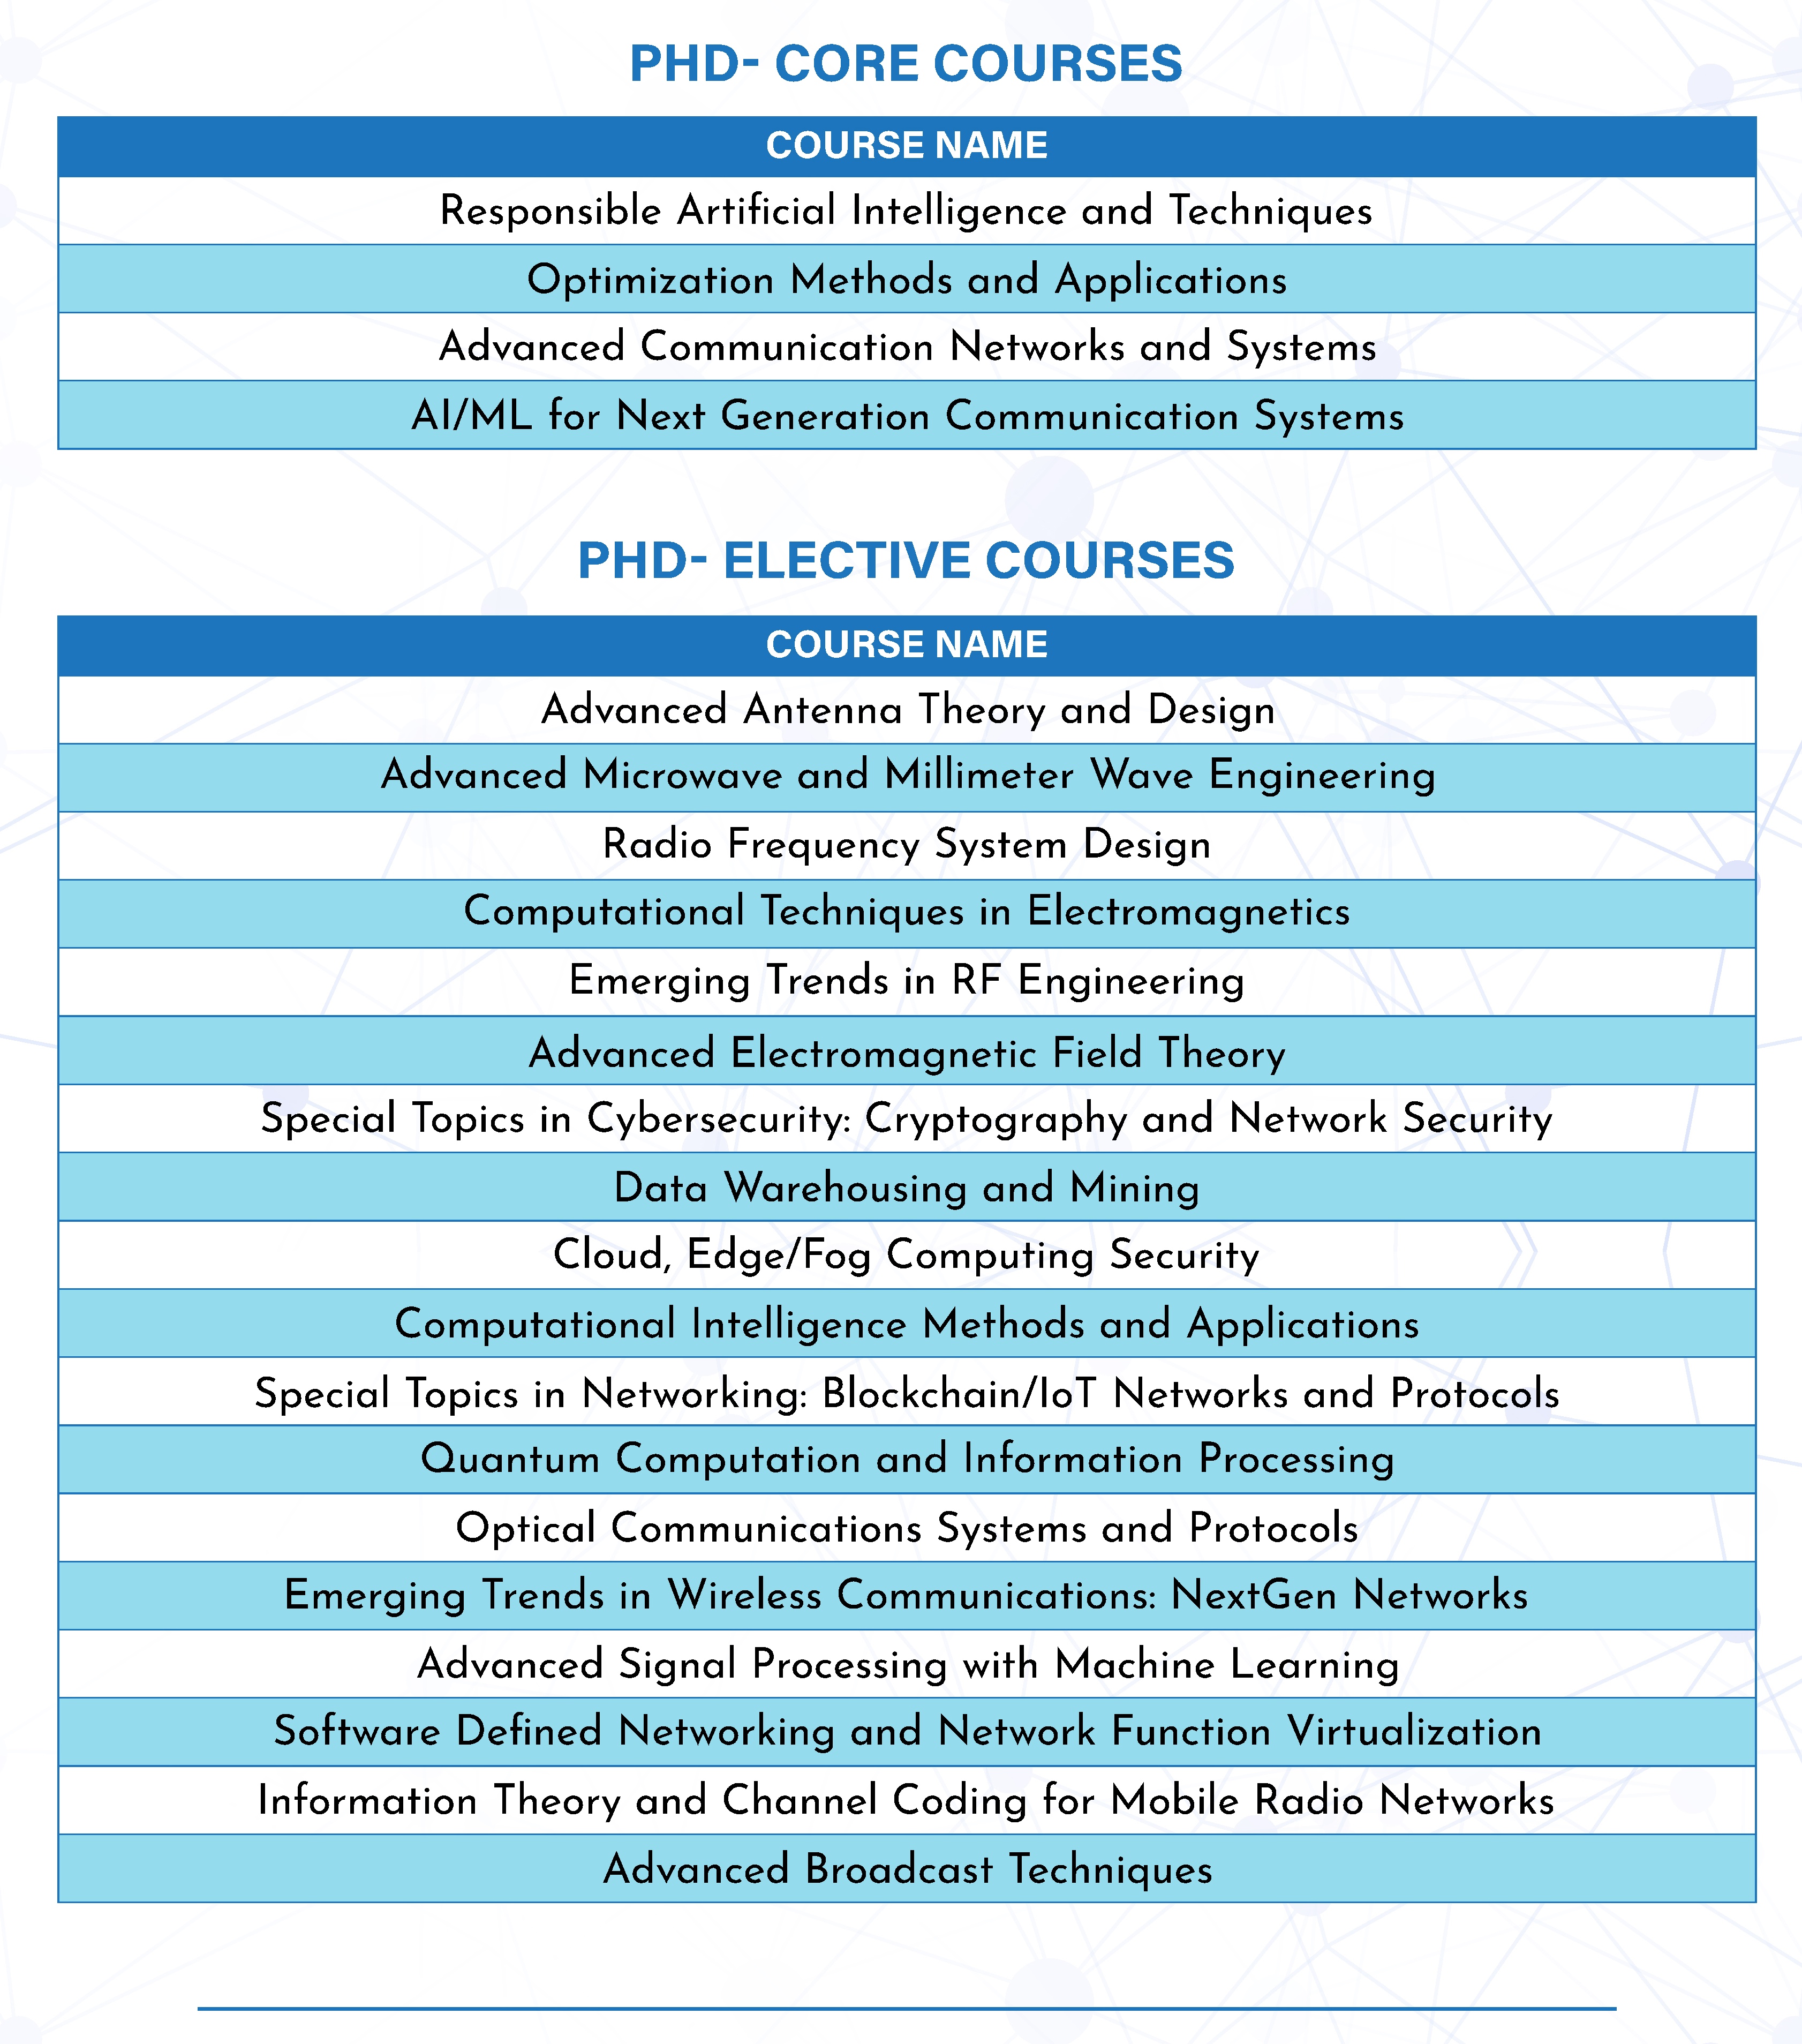 Postgraduate PhD courses